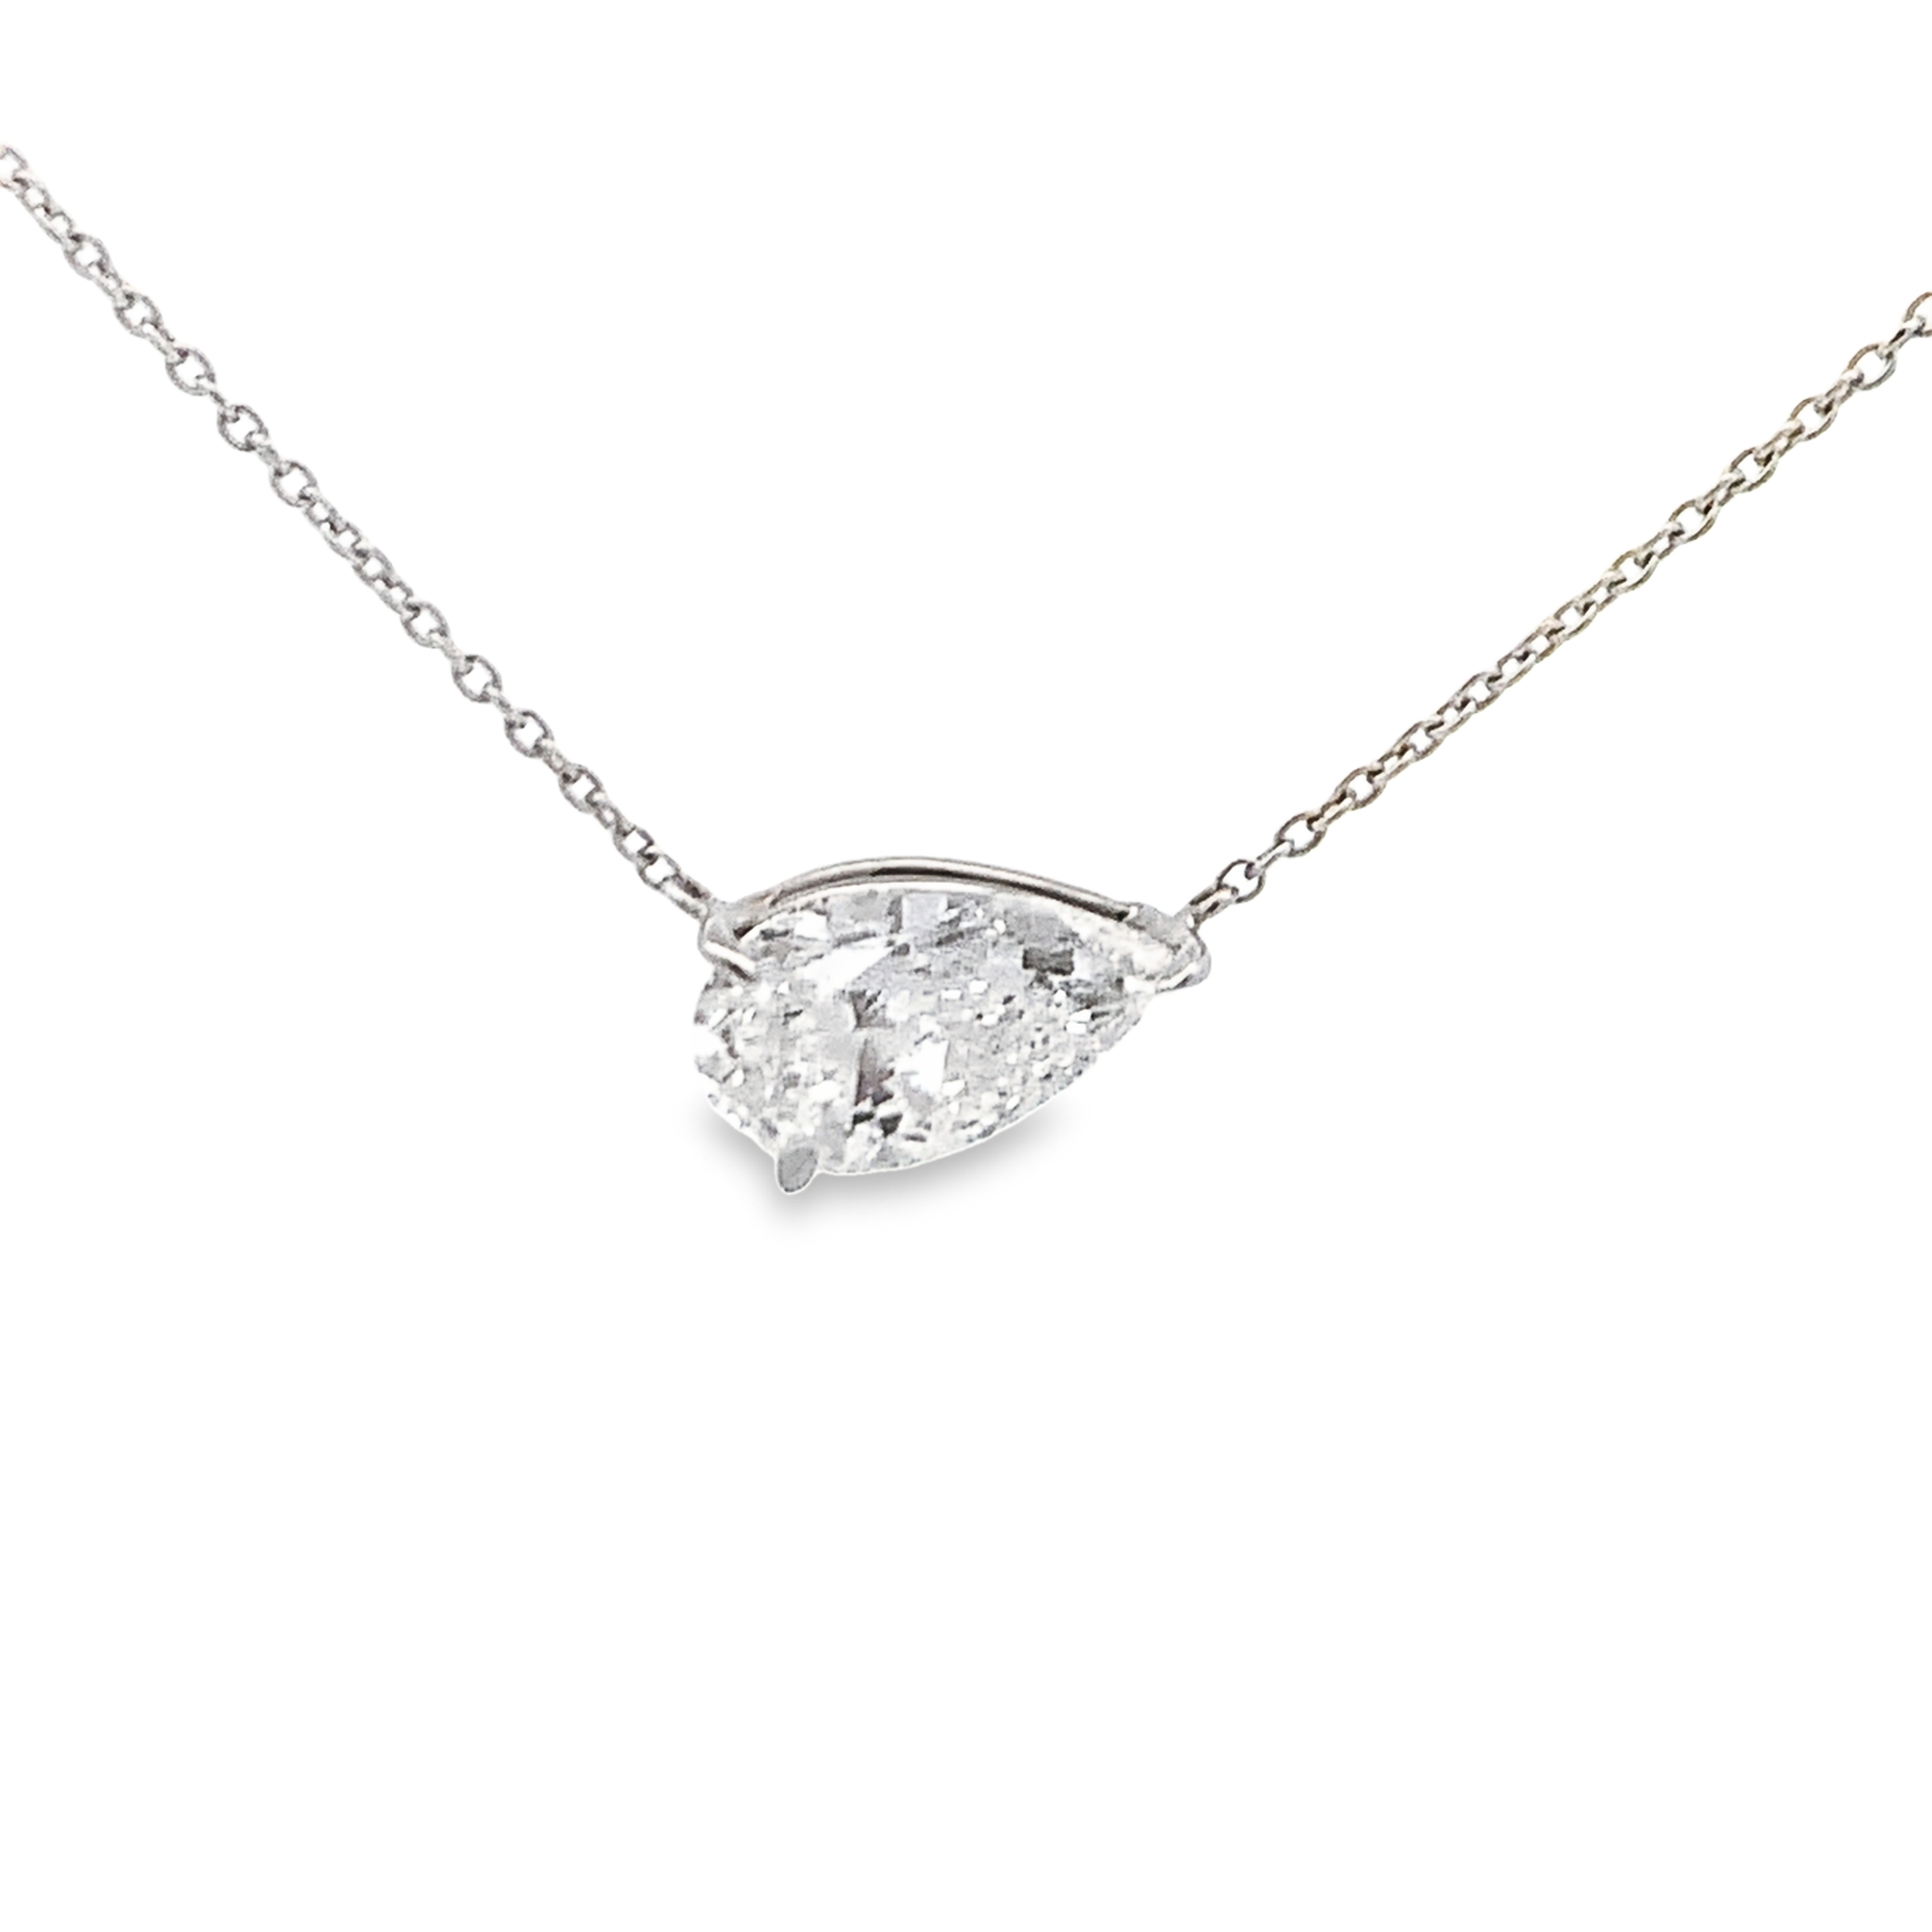 Norman Silverman 18K White Gold Diamond Solitaire Pendant Necklace 16 with 1 Natural Pear Cut Diamond 2.56 CTW E SI2 GIA Cert # 2466560521